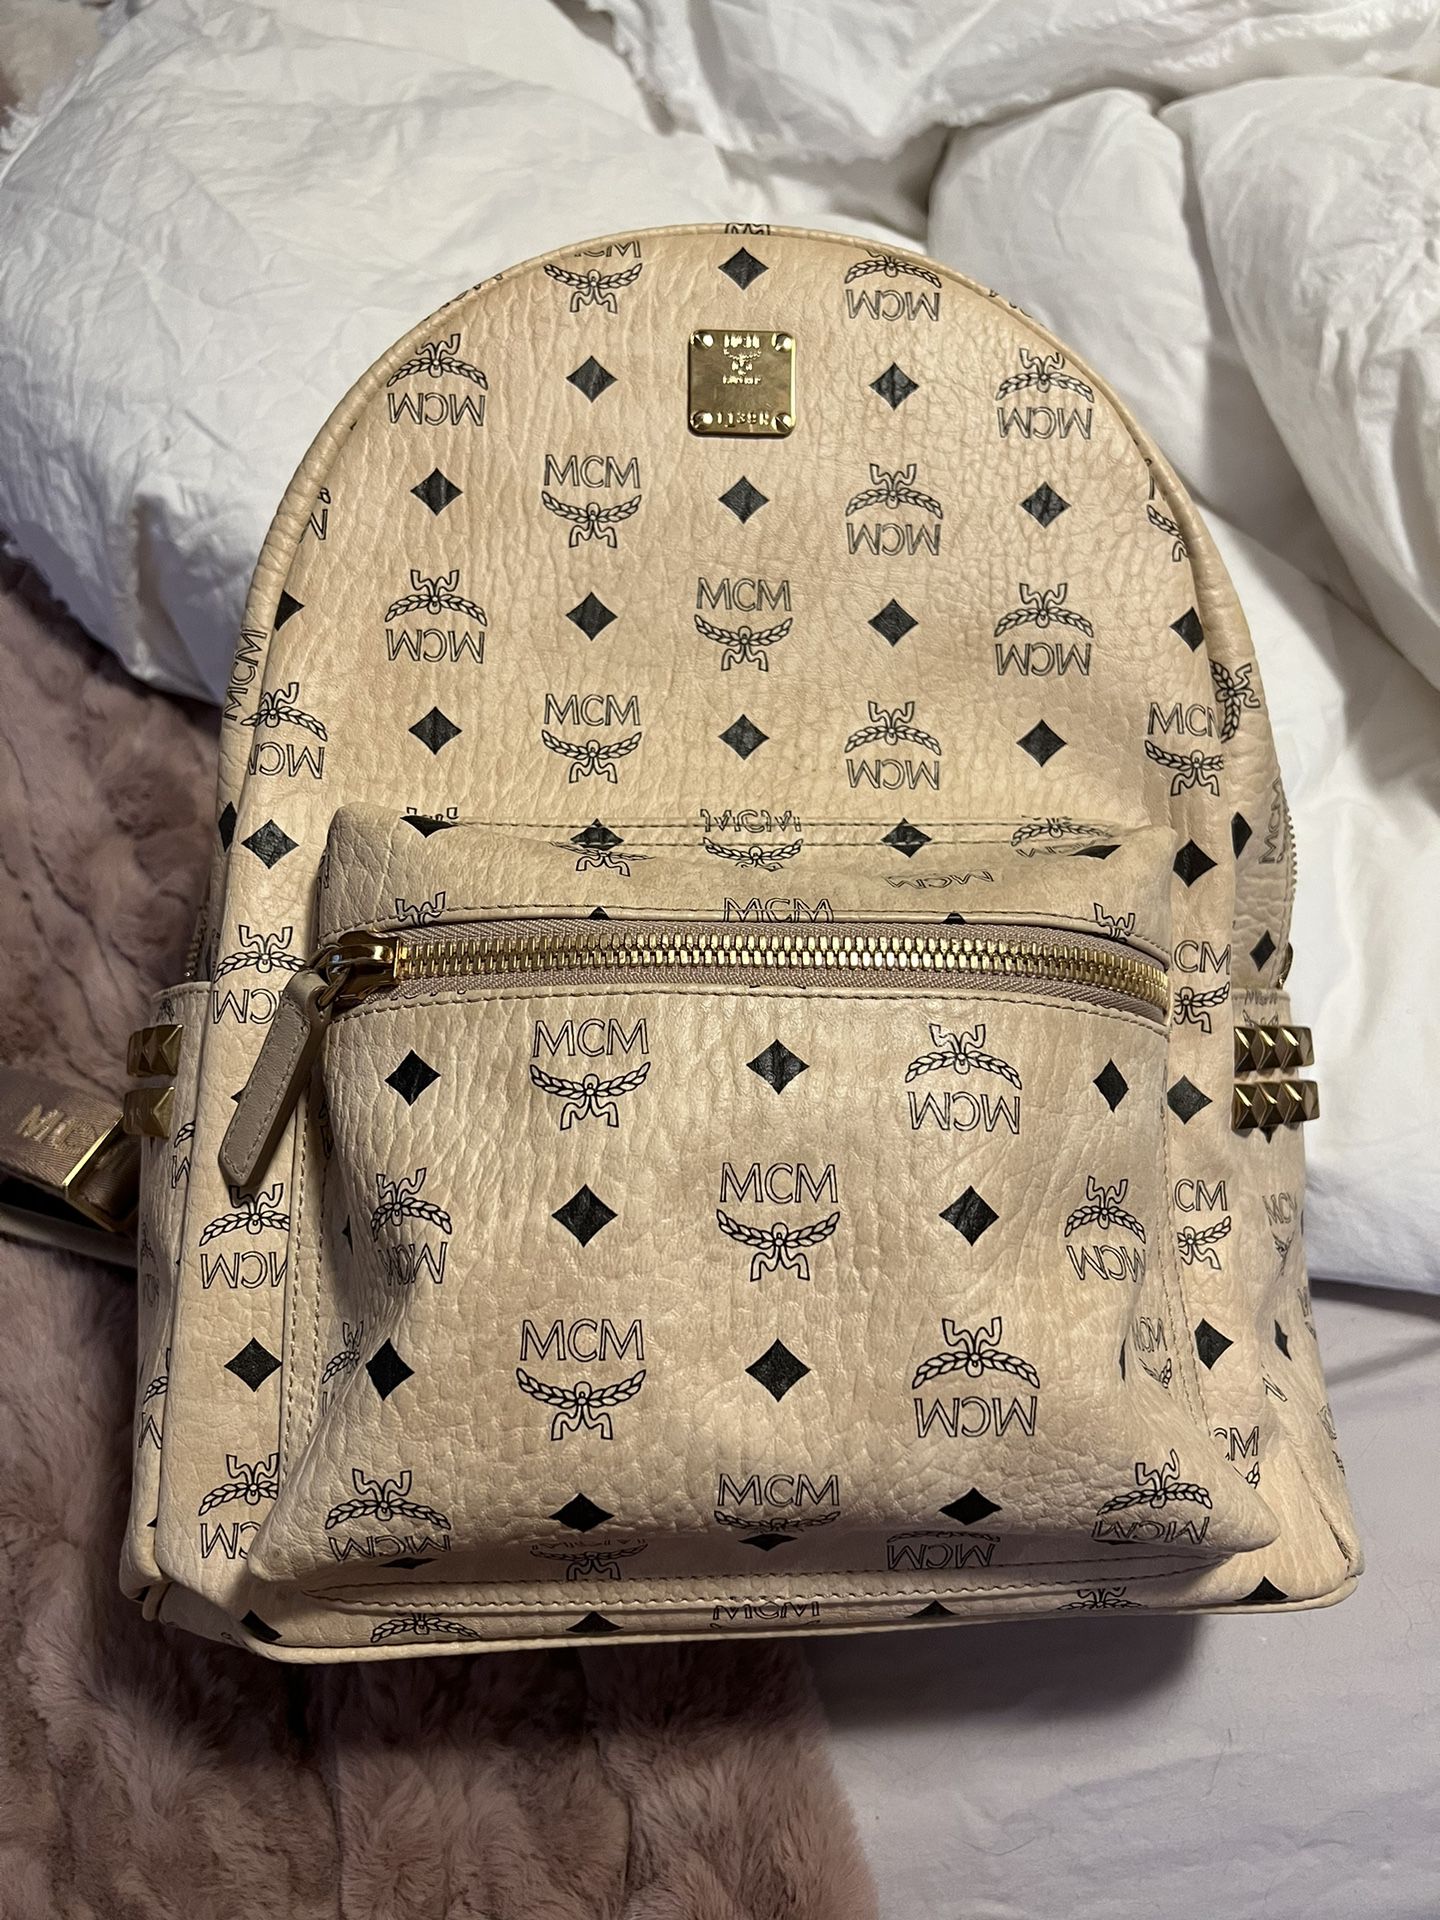 McM Full Sized Beige/gold Backpack